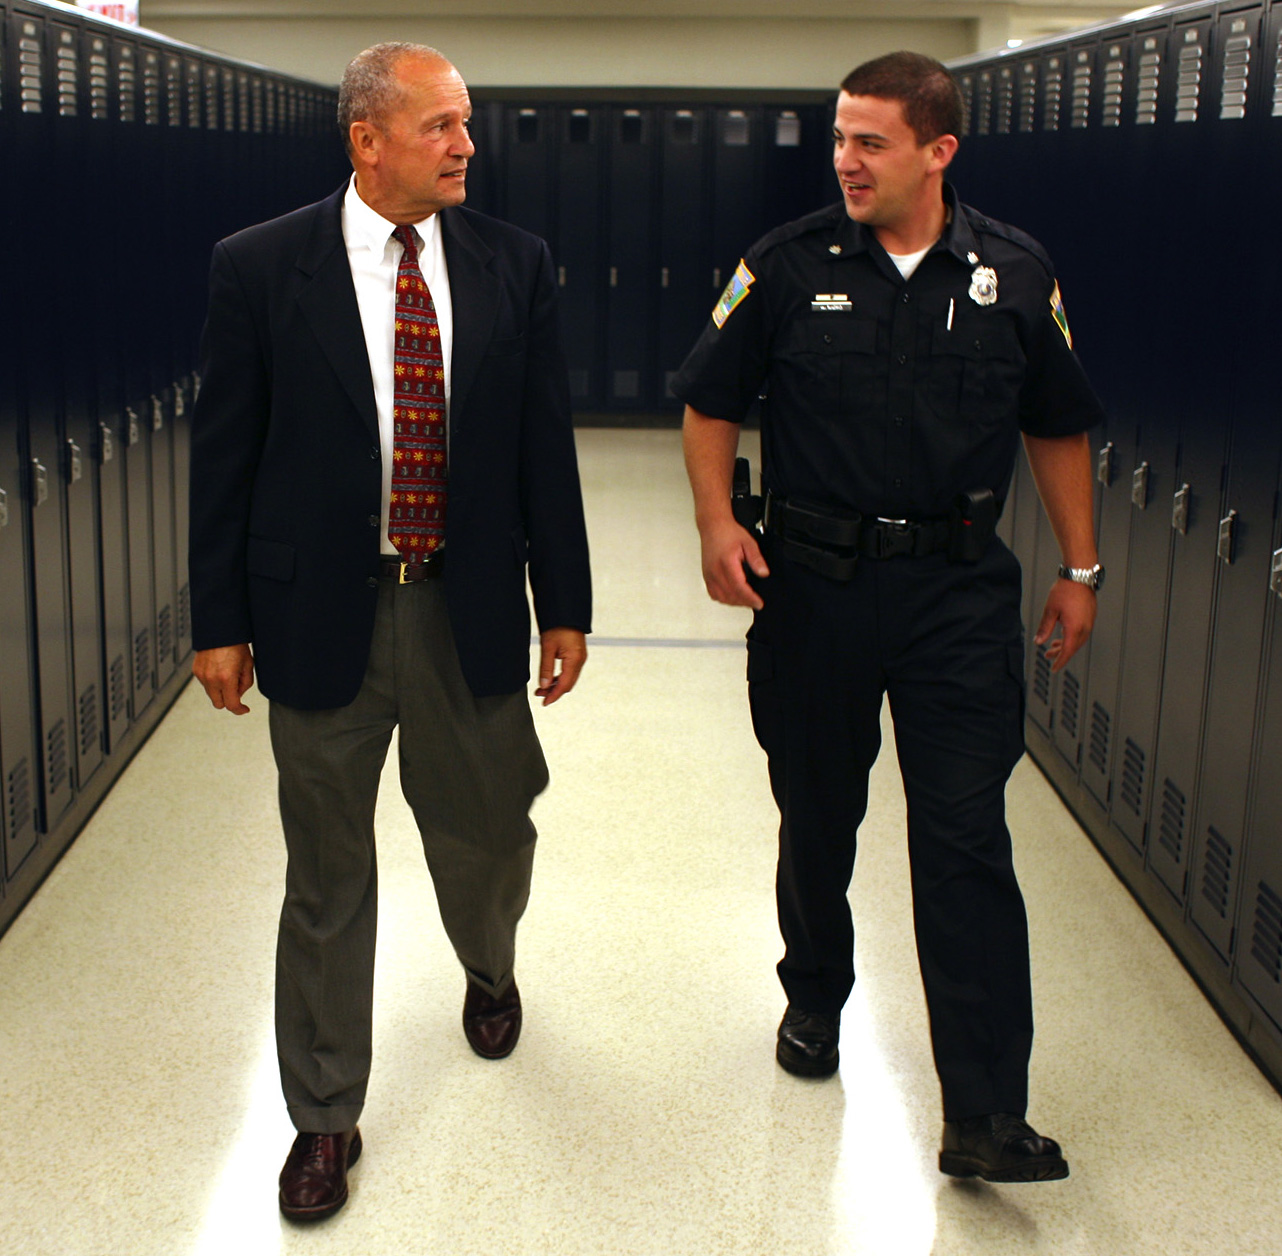 photo of SRO and Principal walking down a hall